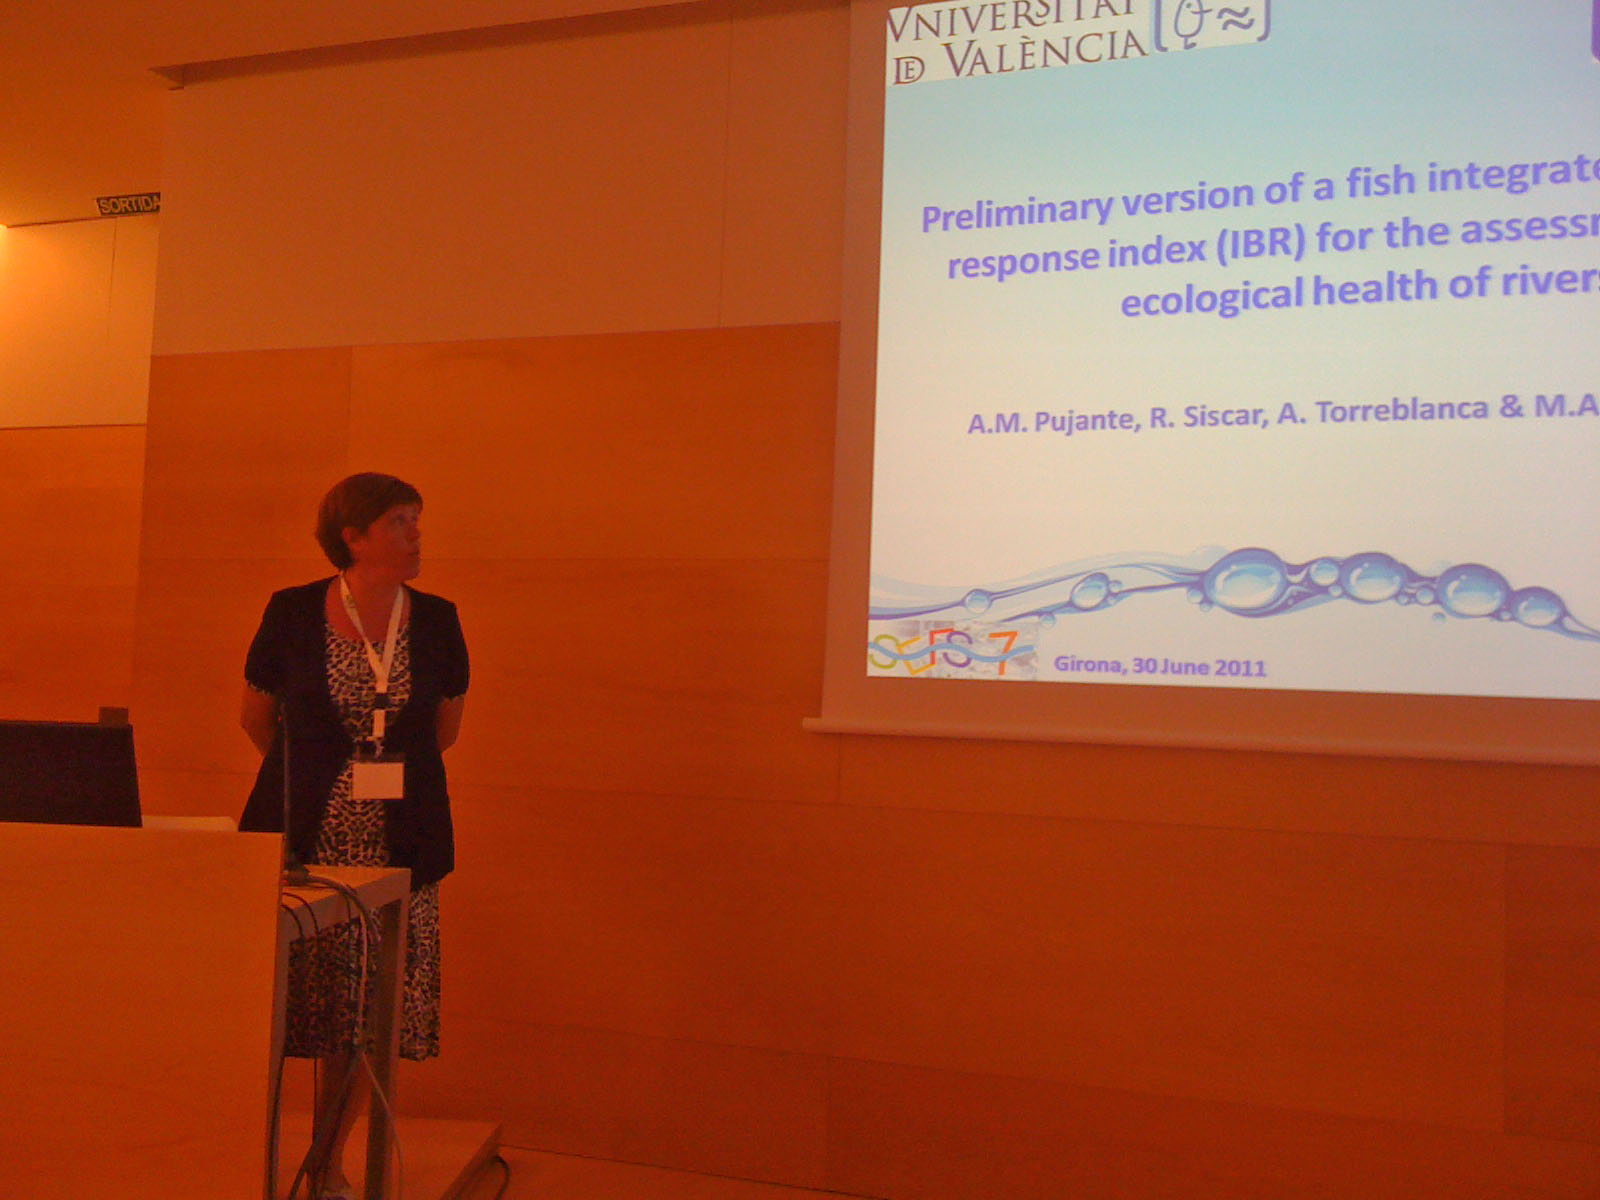 7th Symposium of the European Freshwater Sciences